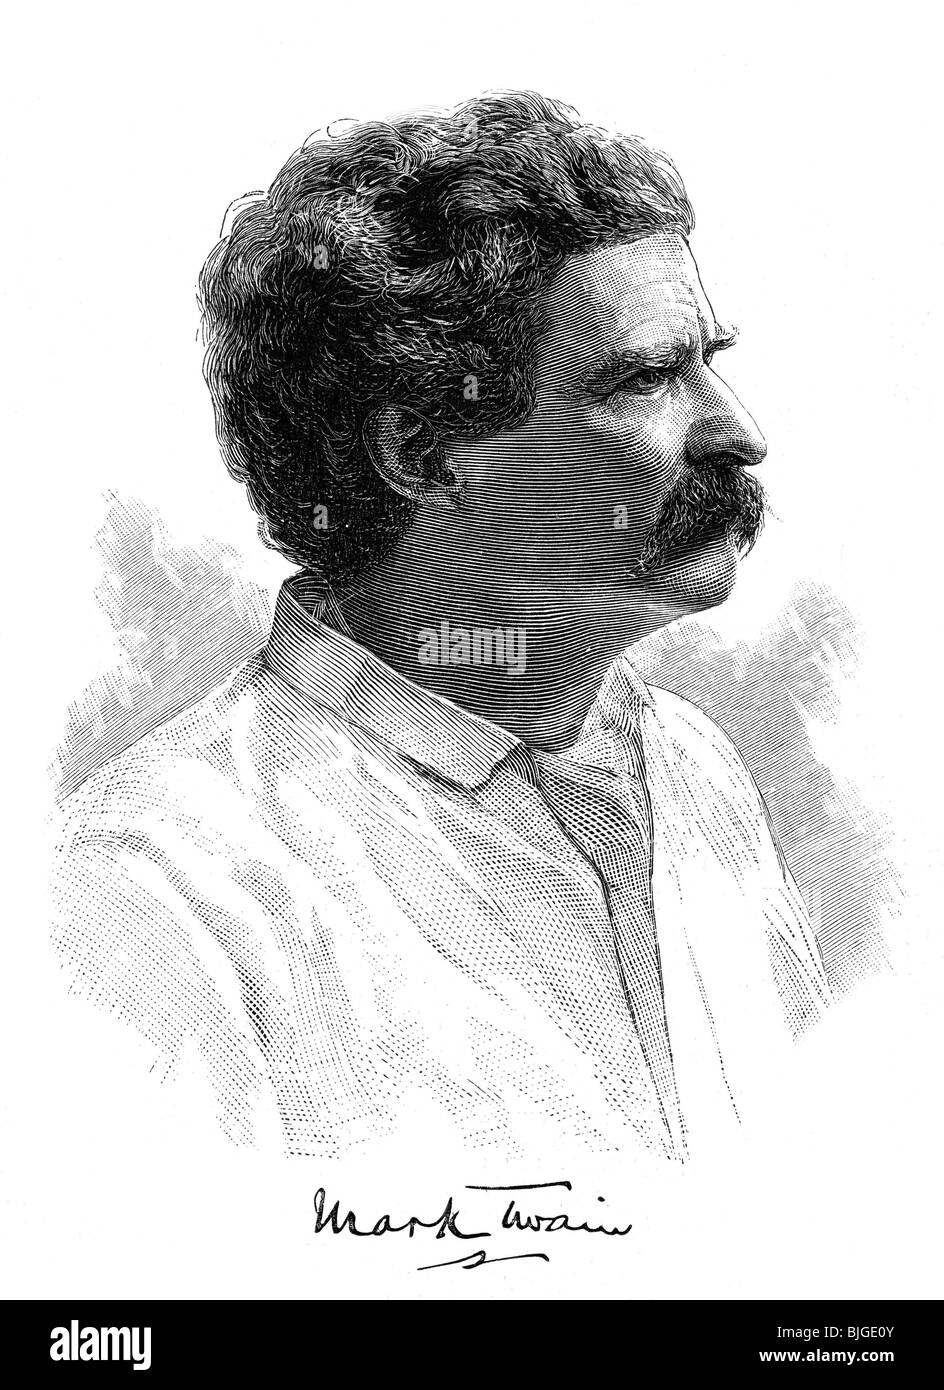 Twain, Mark, 30.11.1835 - 21.4.1910, American author / writer, humorist, portrait, wood engraving, late 19th century, Stock Photo